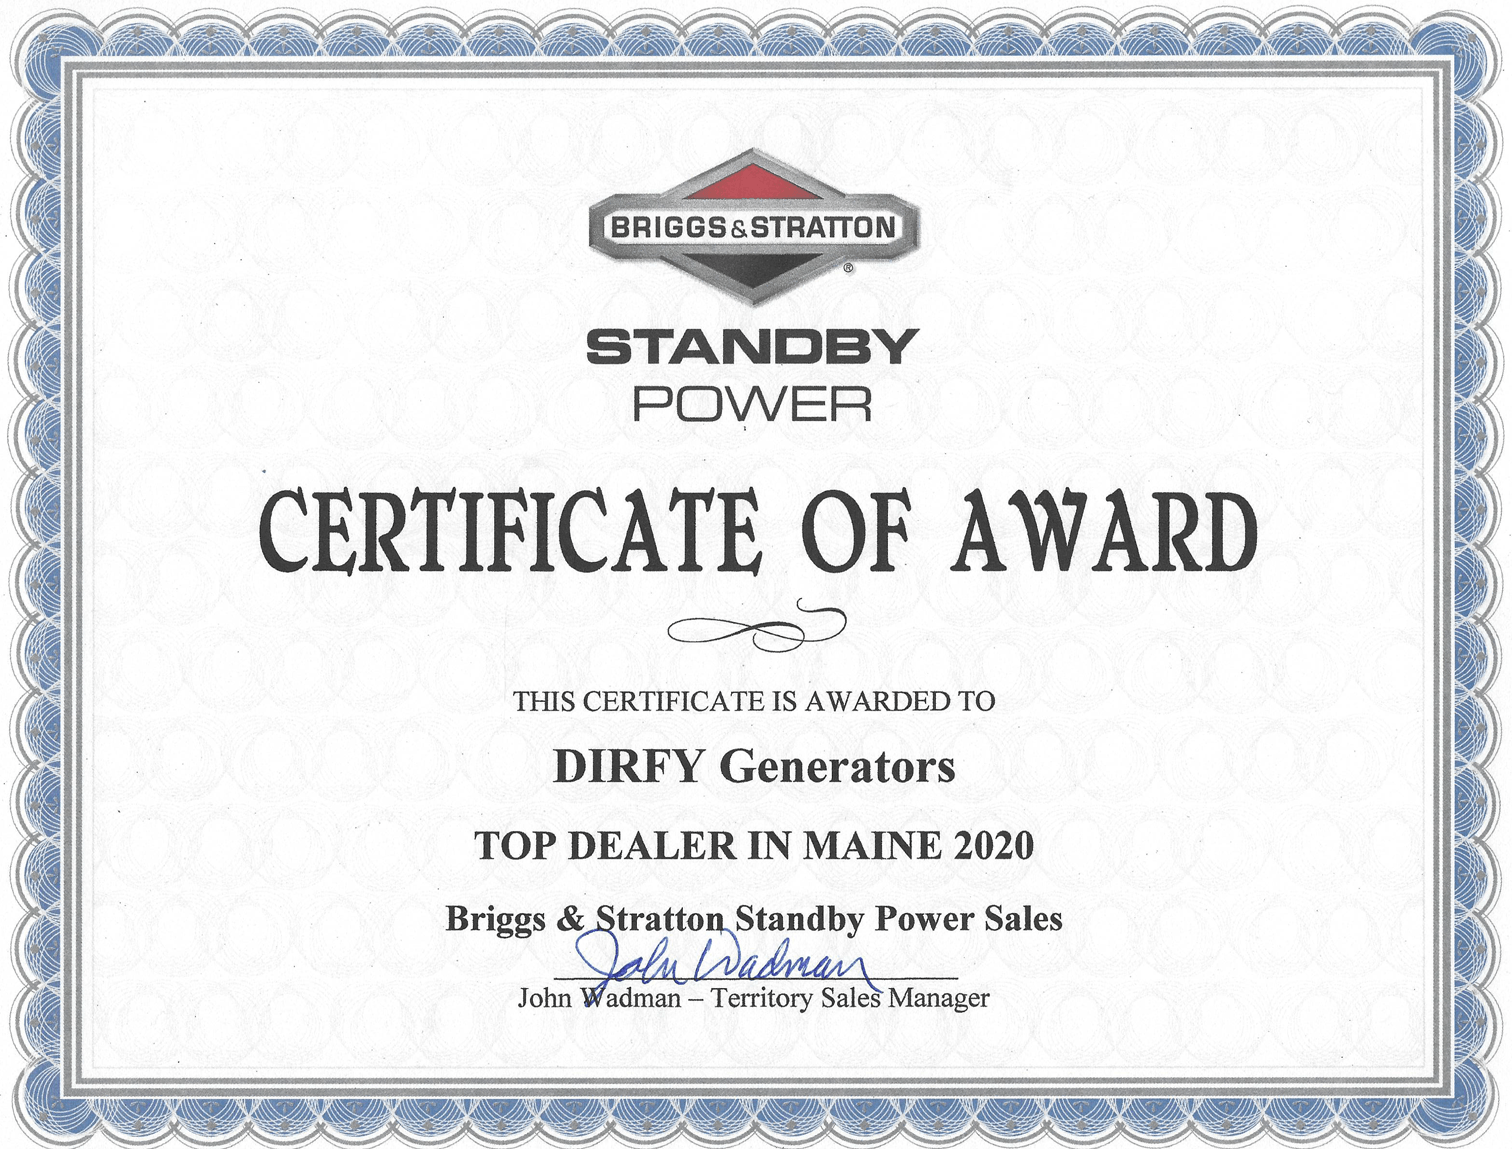 Certificate of Award — Limington, ME — DIRFY Generators